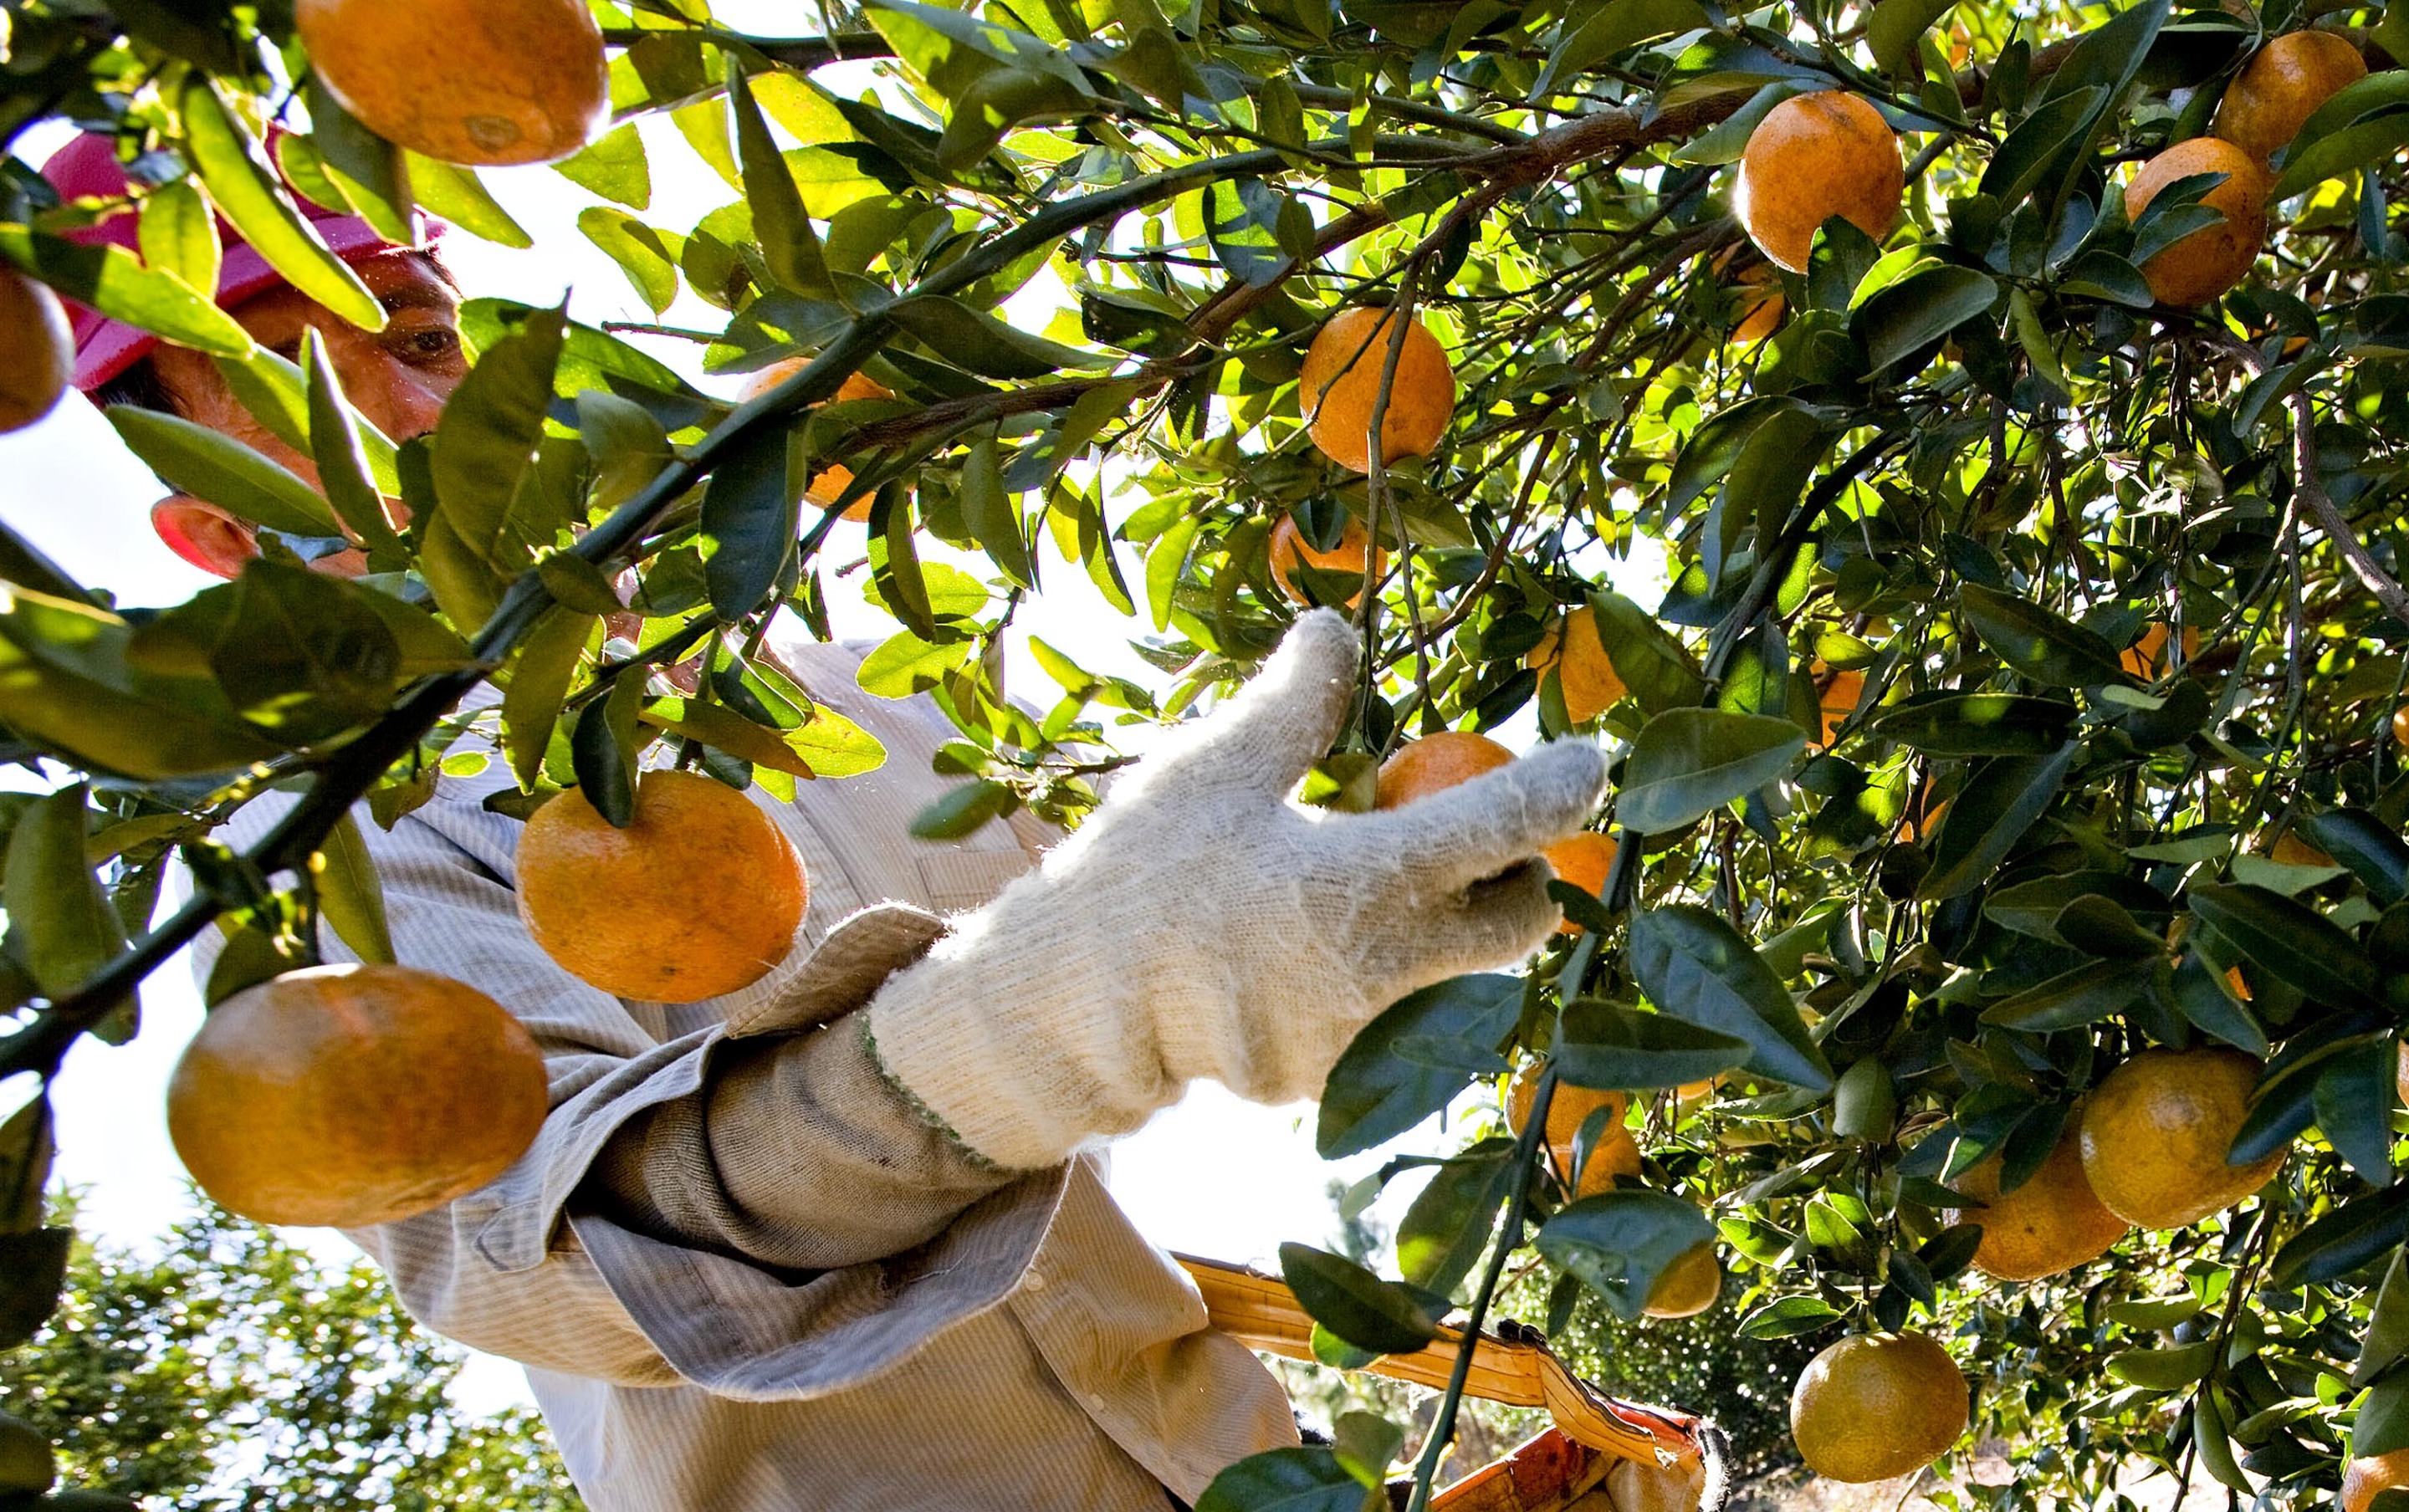 Florida Orange Crop Shrinks to 77Year Low, Boosting Juice Costs